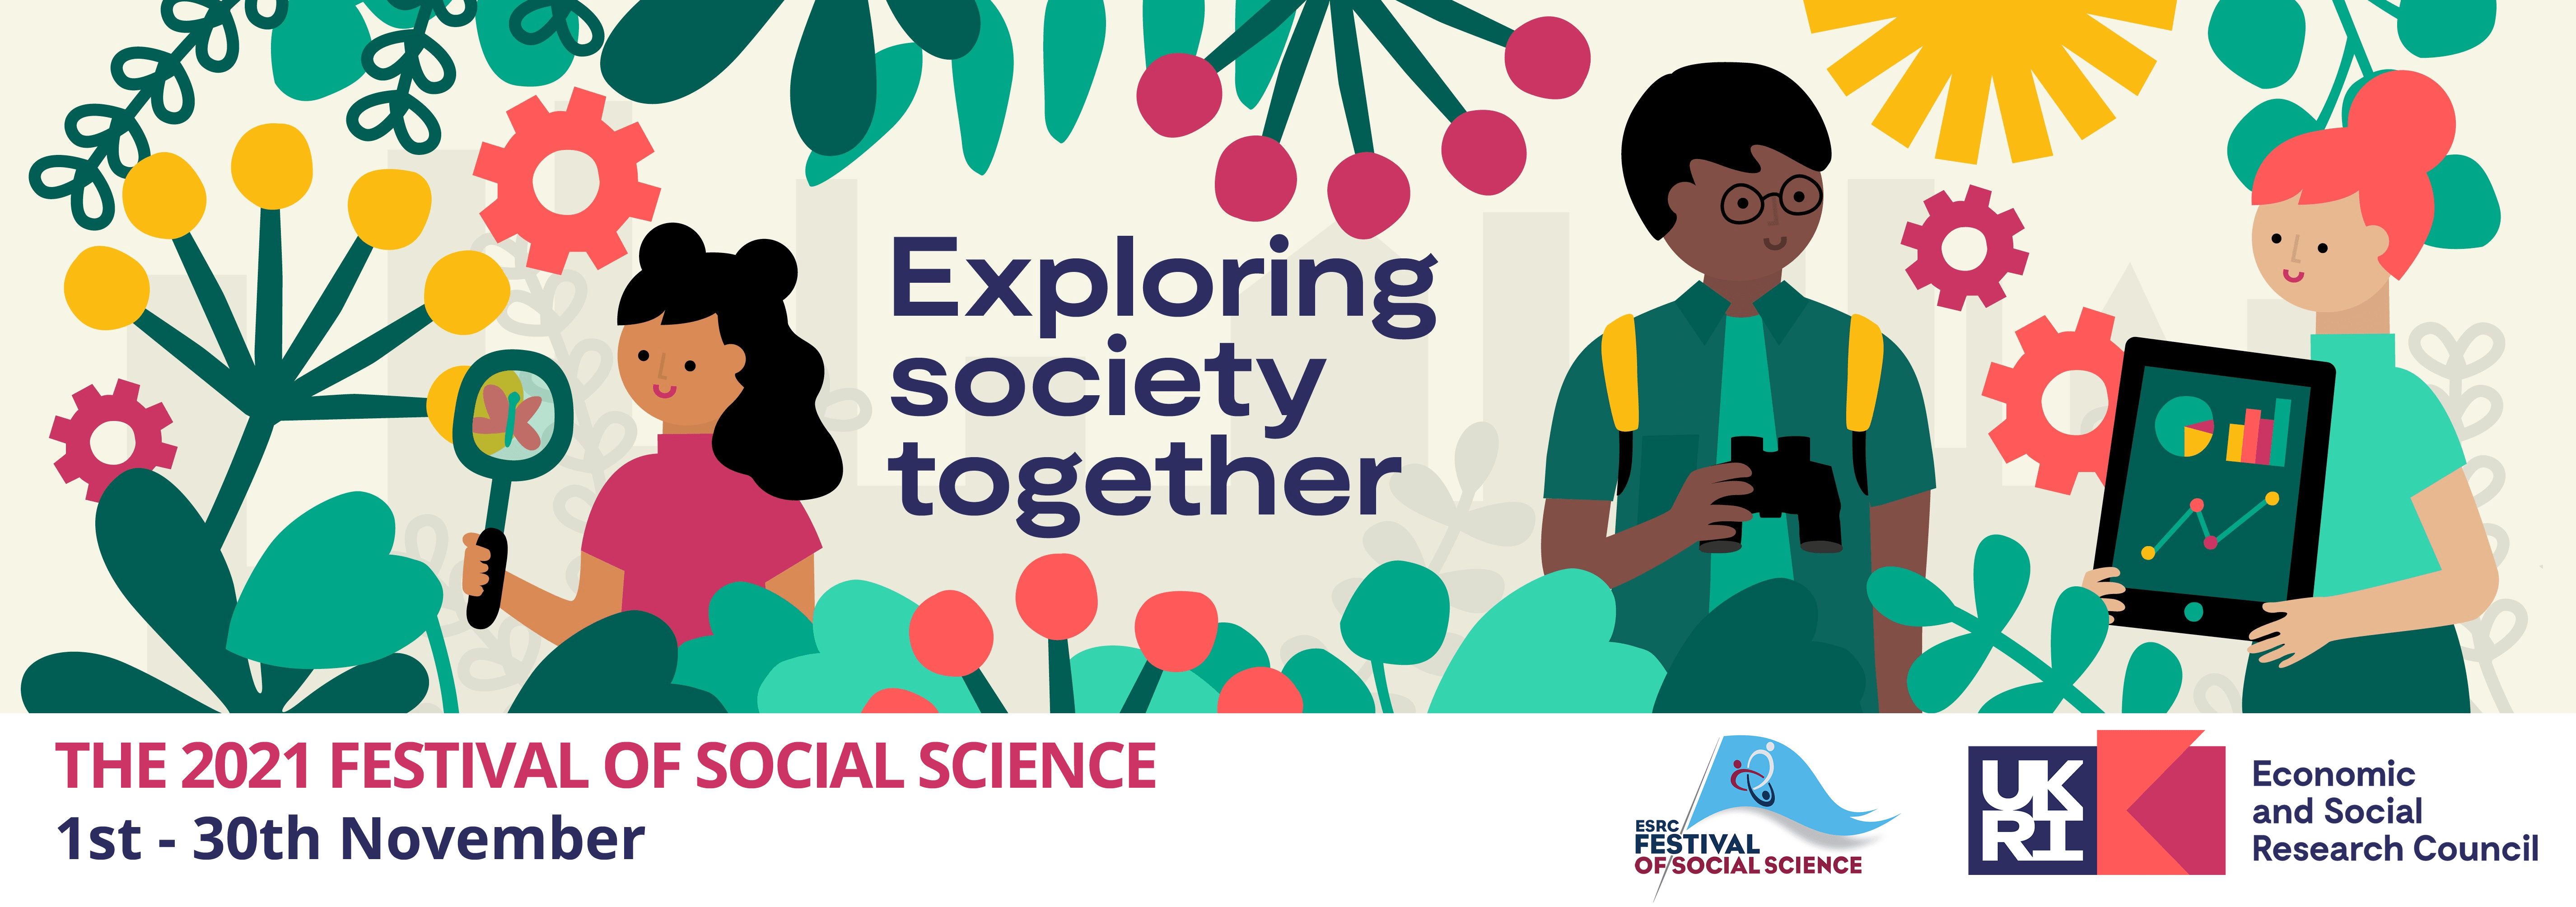 ESRC Festival of Social Science 2021 Banner